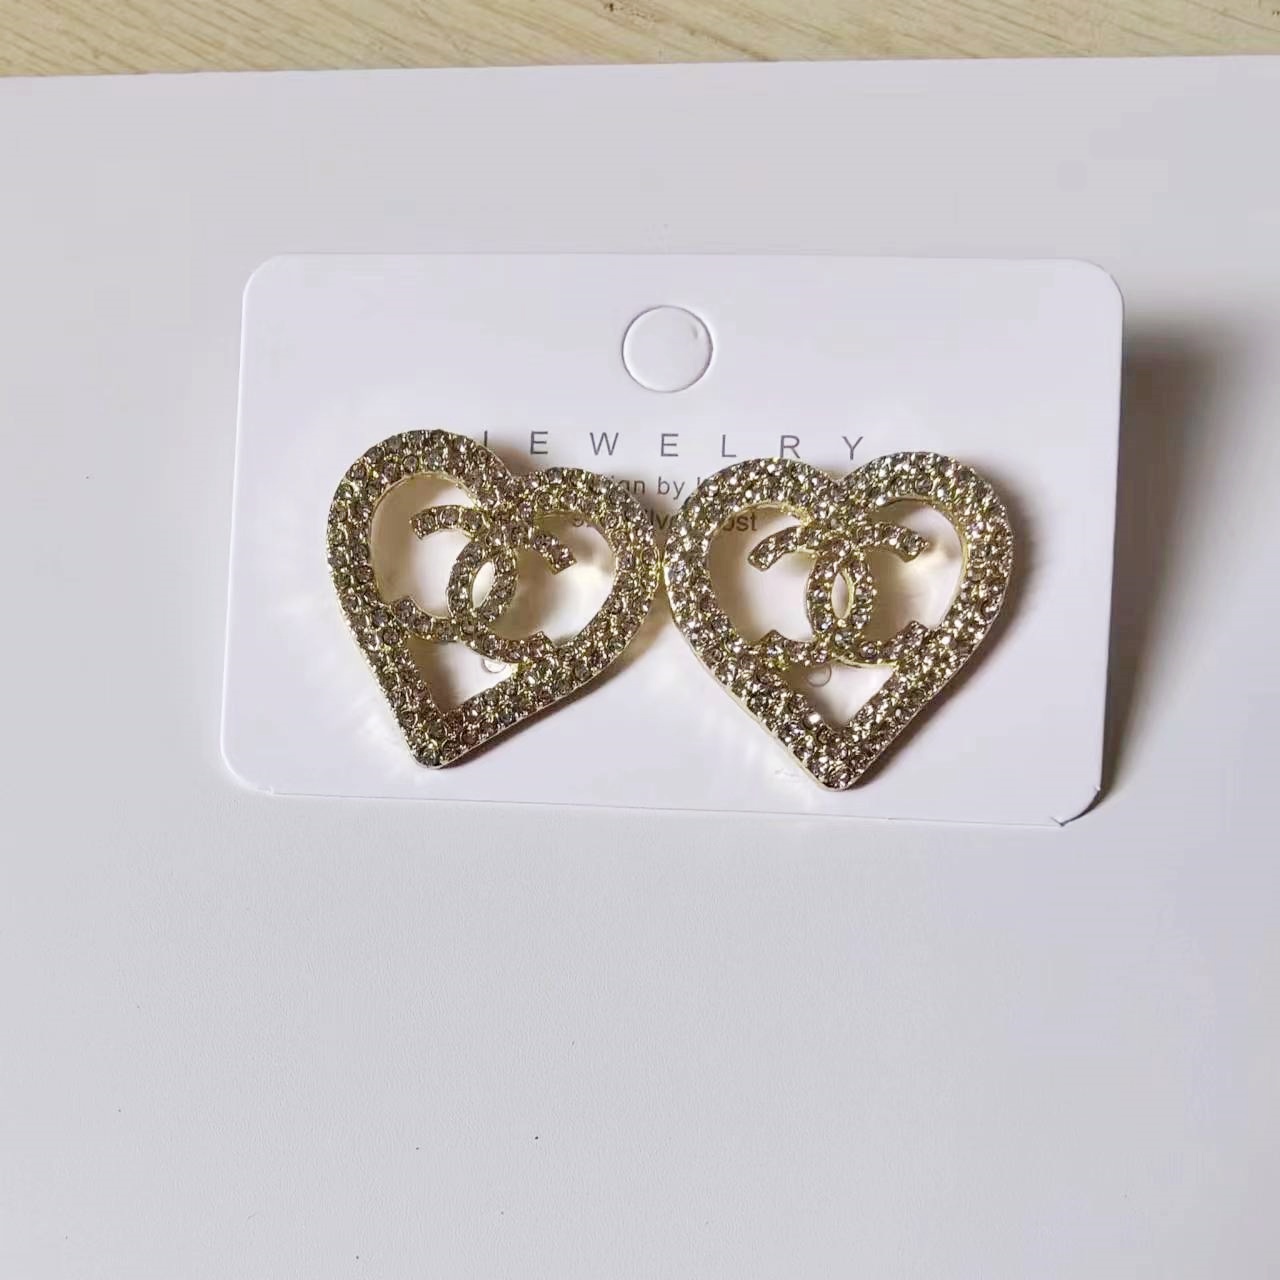 Big sale!Chanel crystal heart earrings